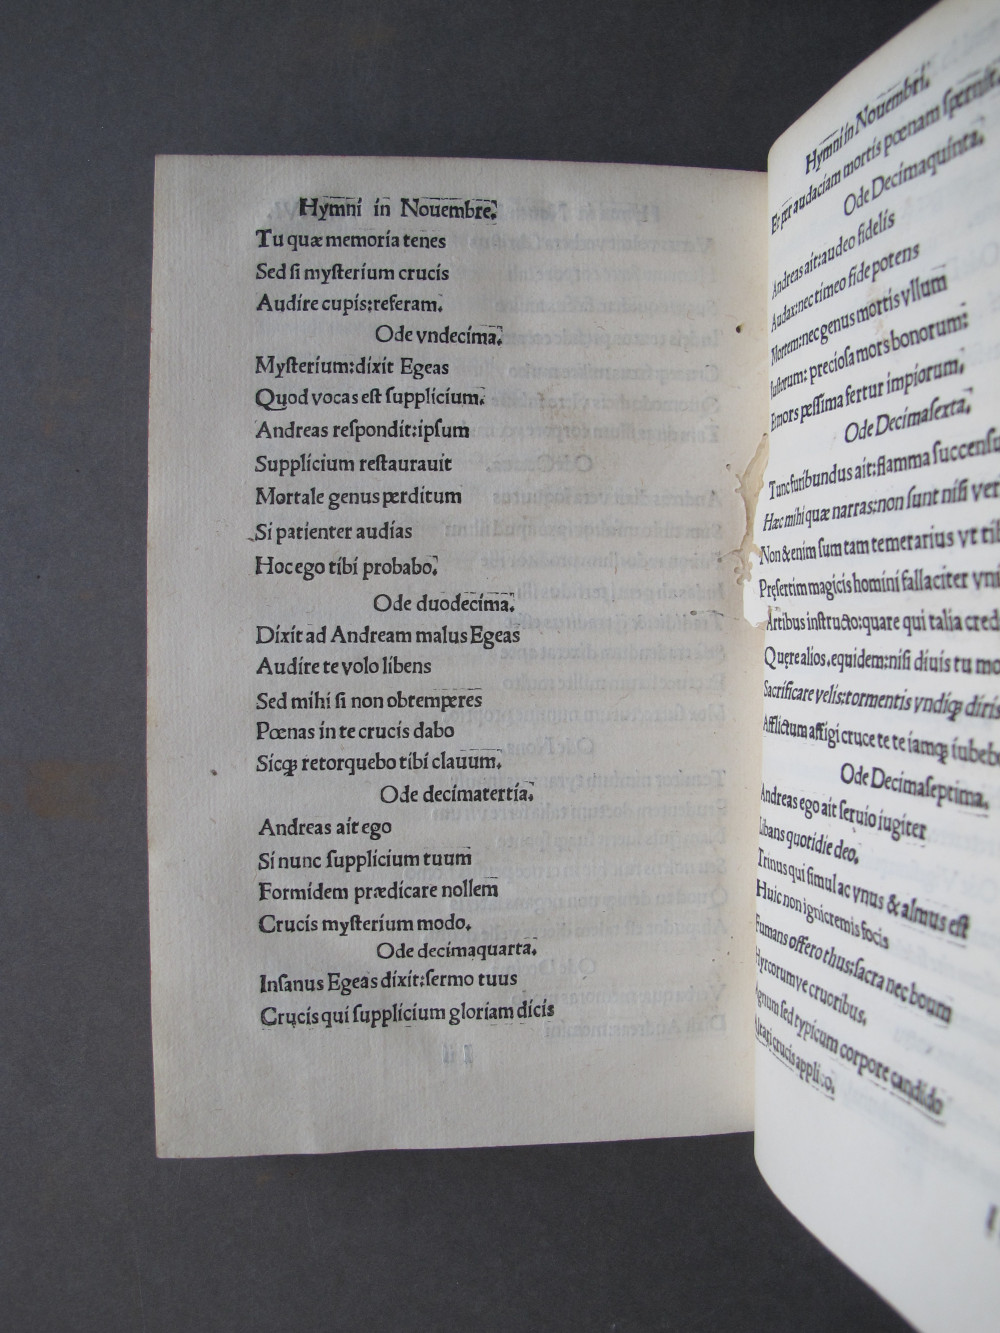 Folio 66 verso